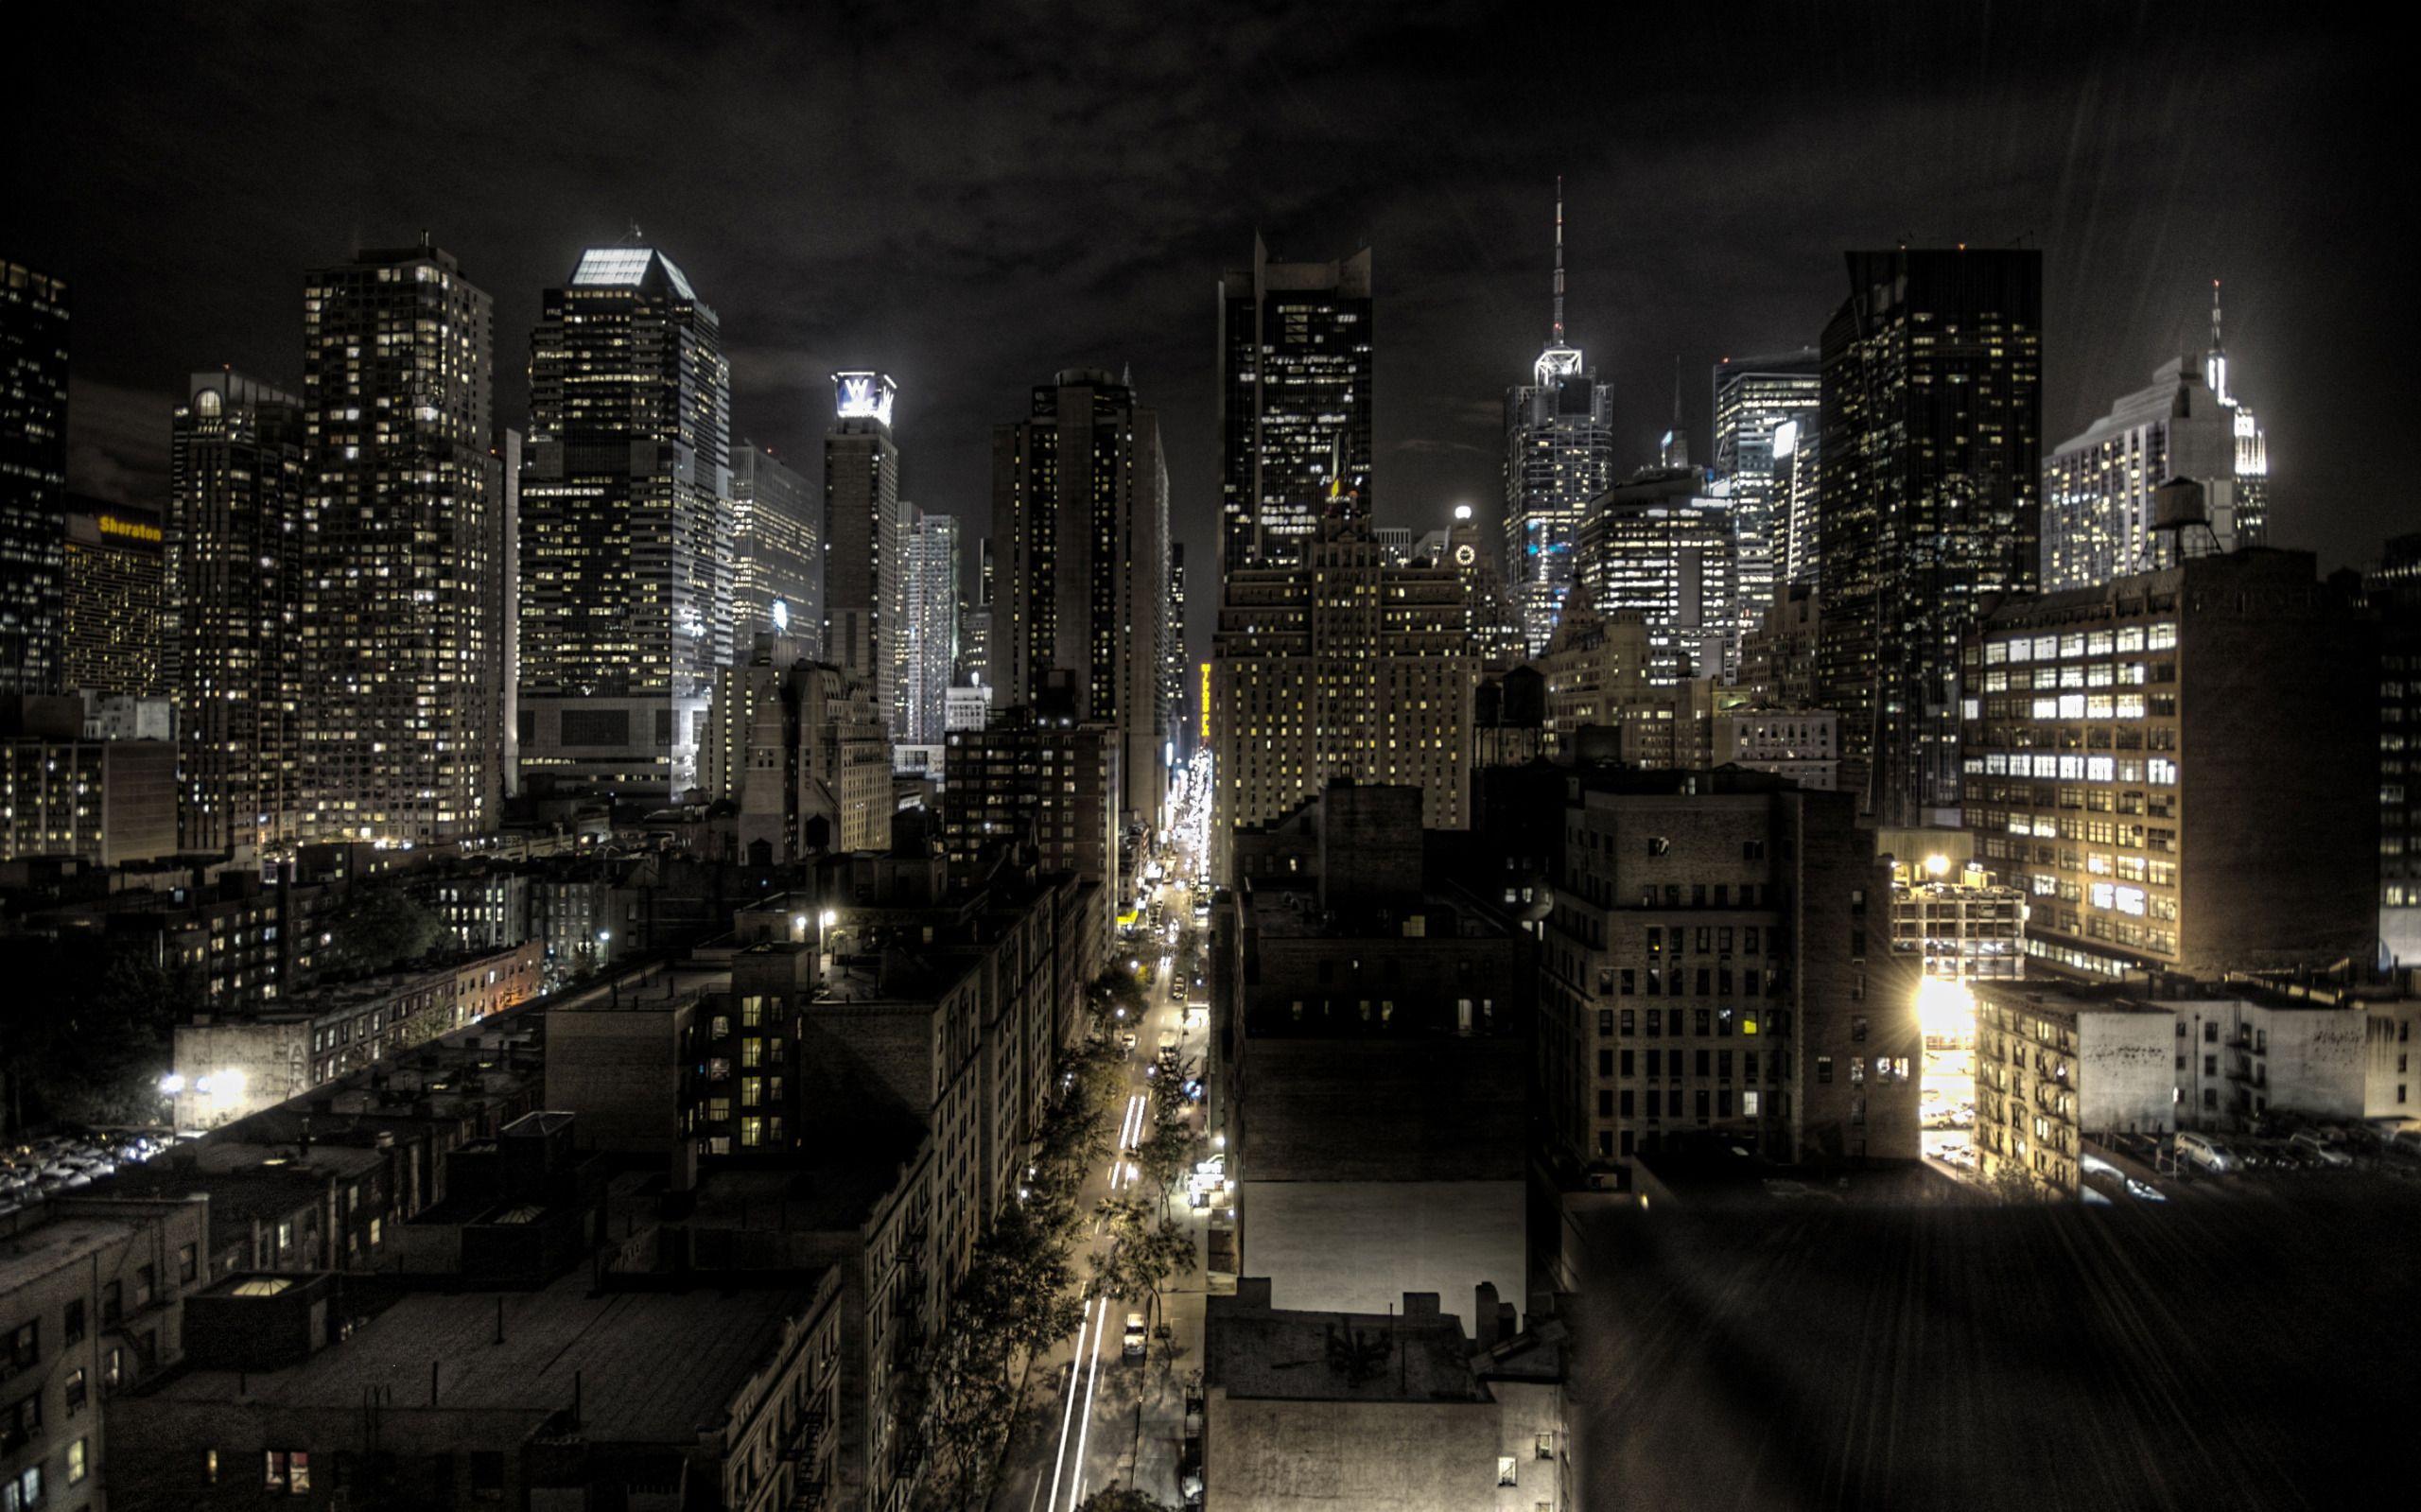 New York City Skyscrapers Night View widescreen wallpaper. Wide